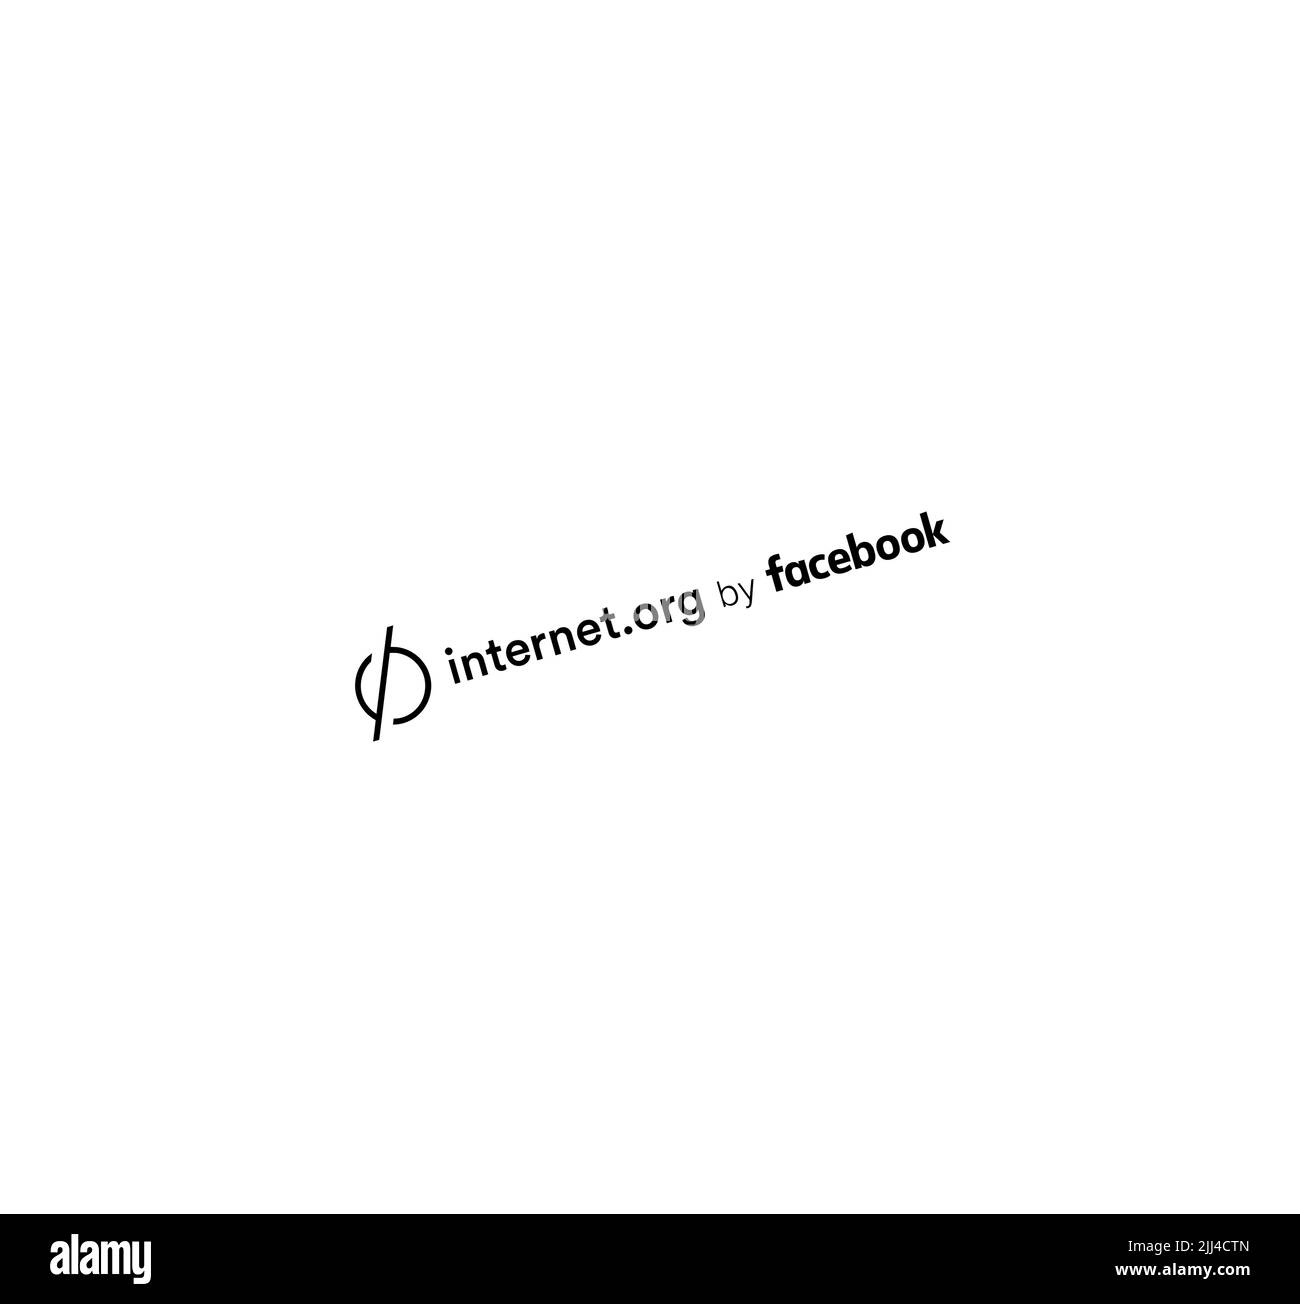 Internet. org, rotated logo, white background Stock Photo